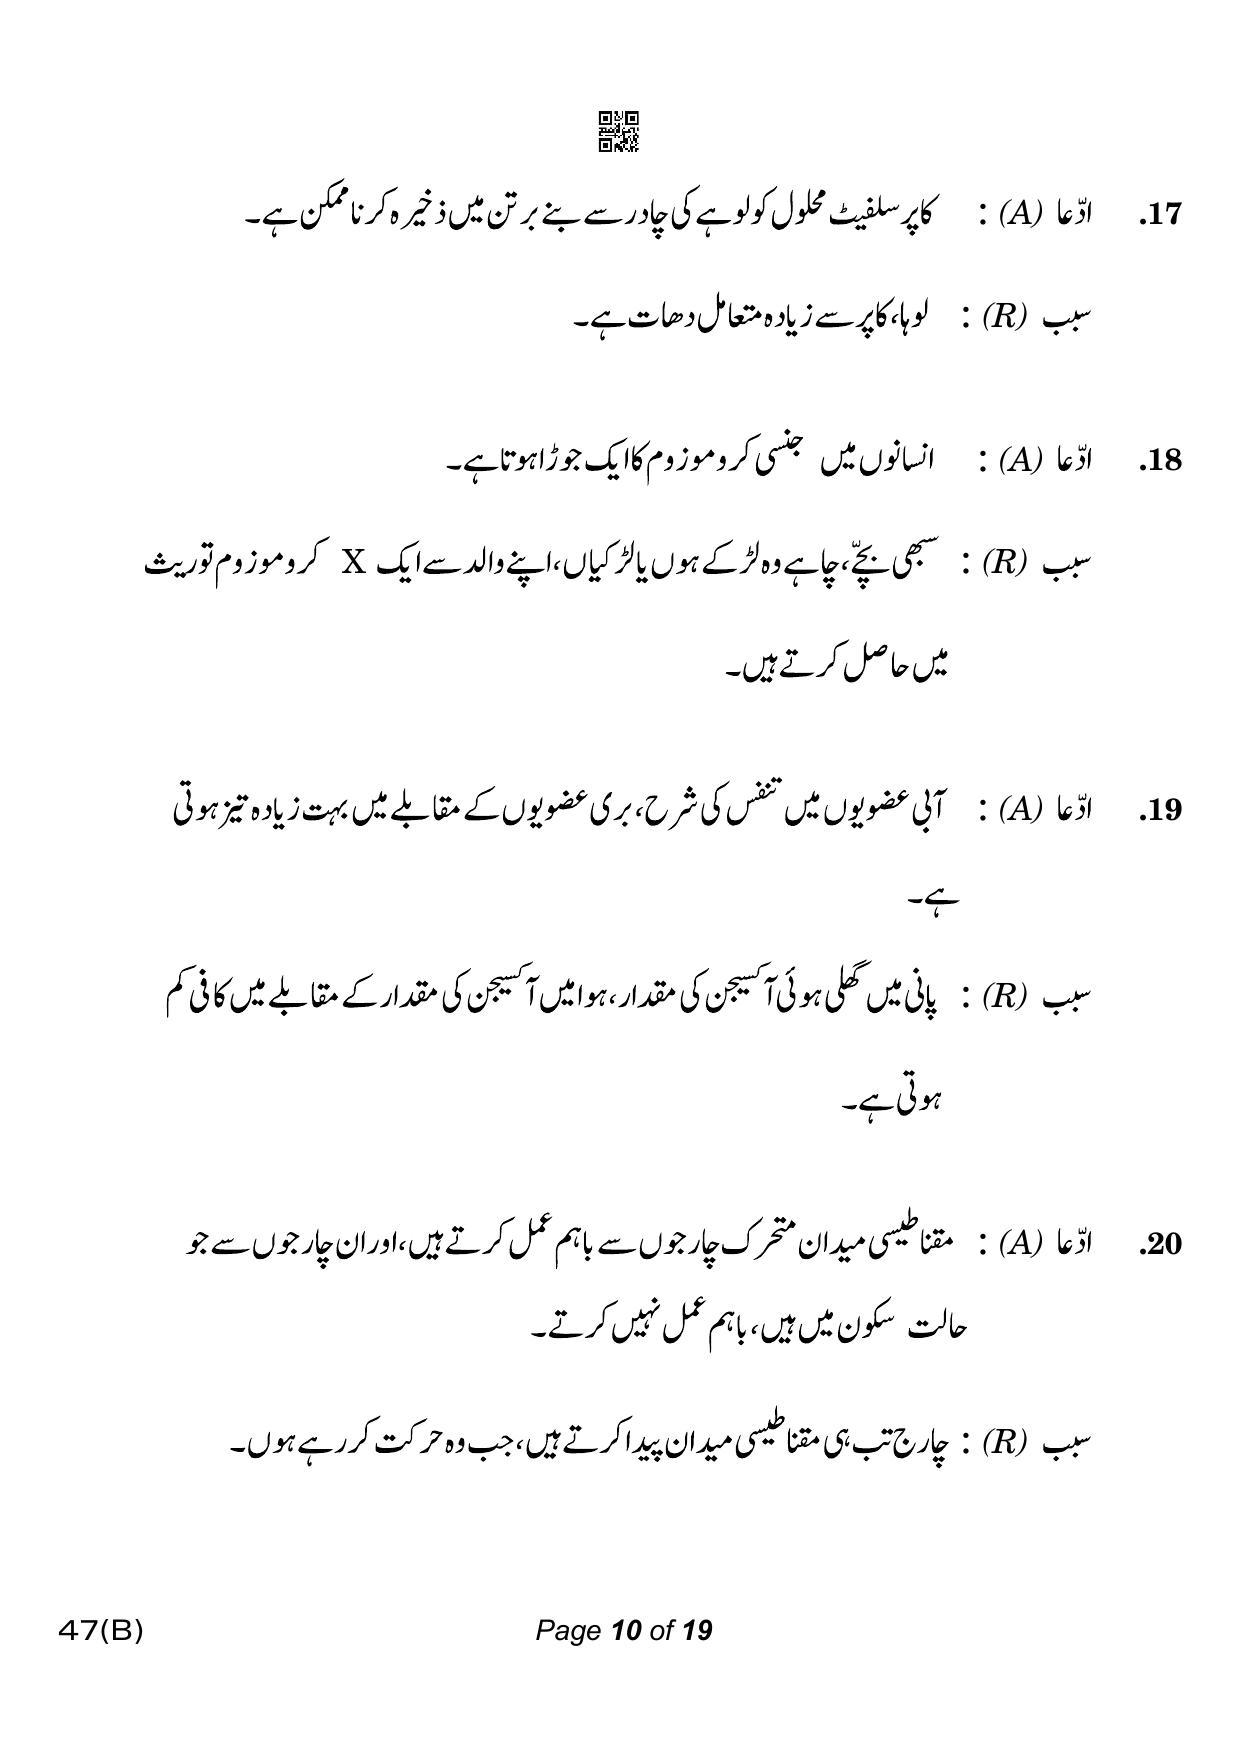 CBSE Class 10 47-B-5 Science for VI Urdu Version 2023 Question Paper - Page 10